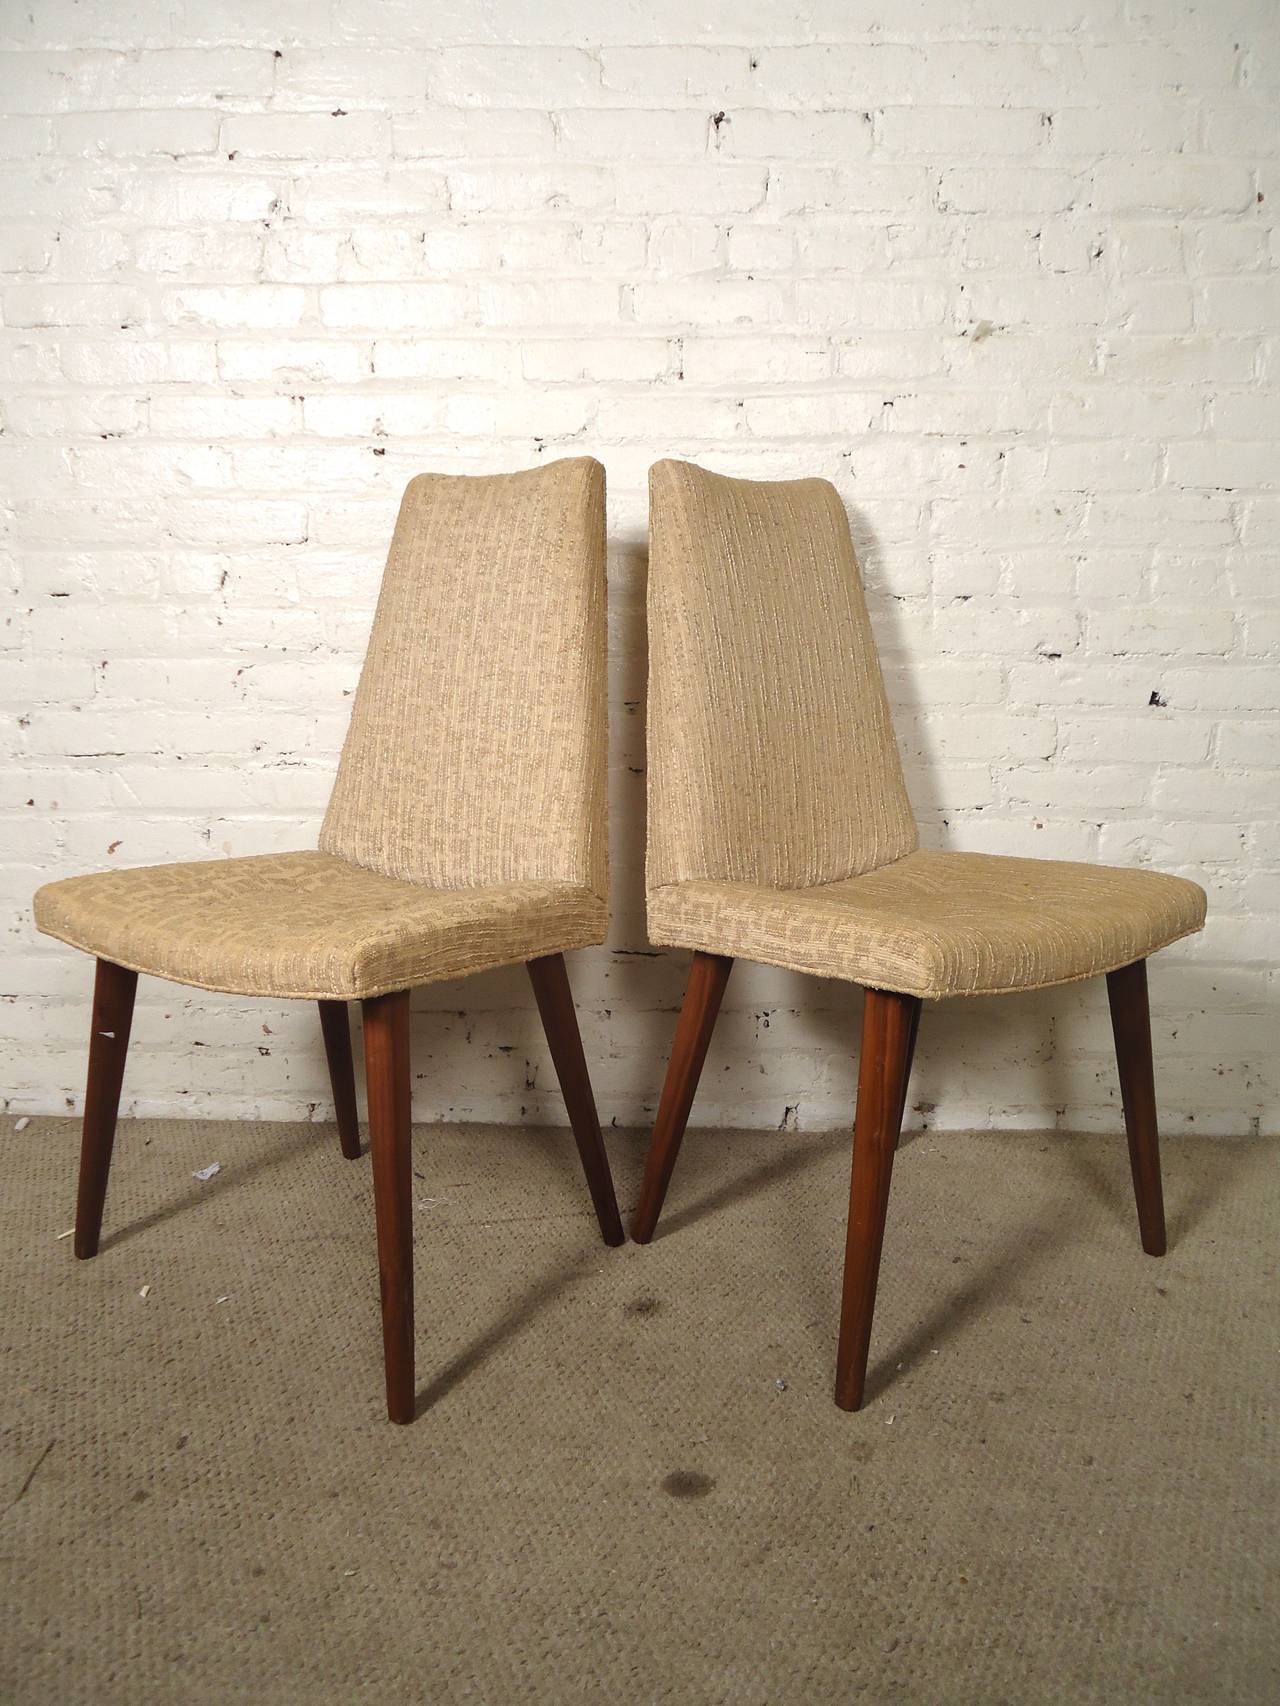 Mid-20th Century Six Mid-Century Modern Chairs